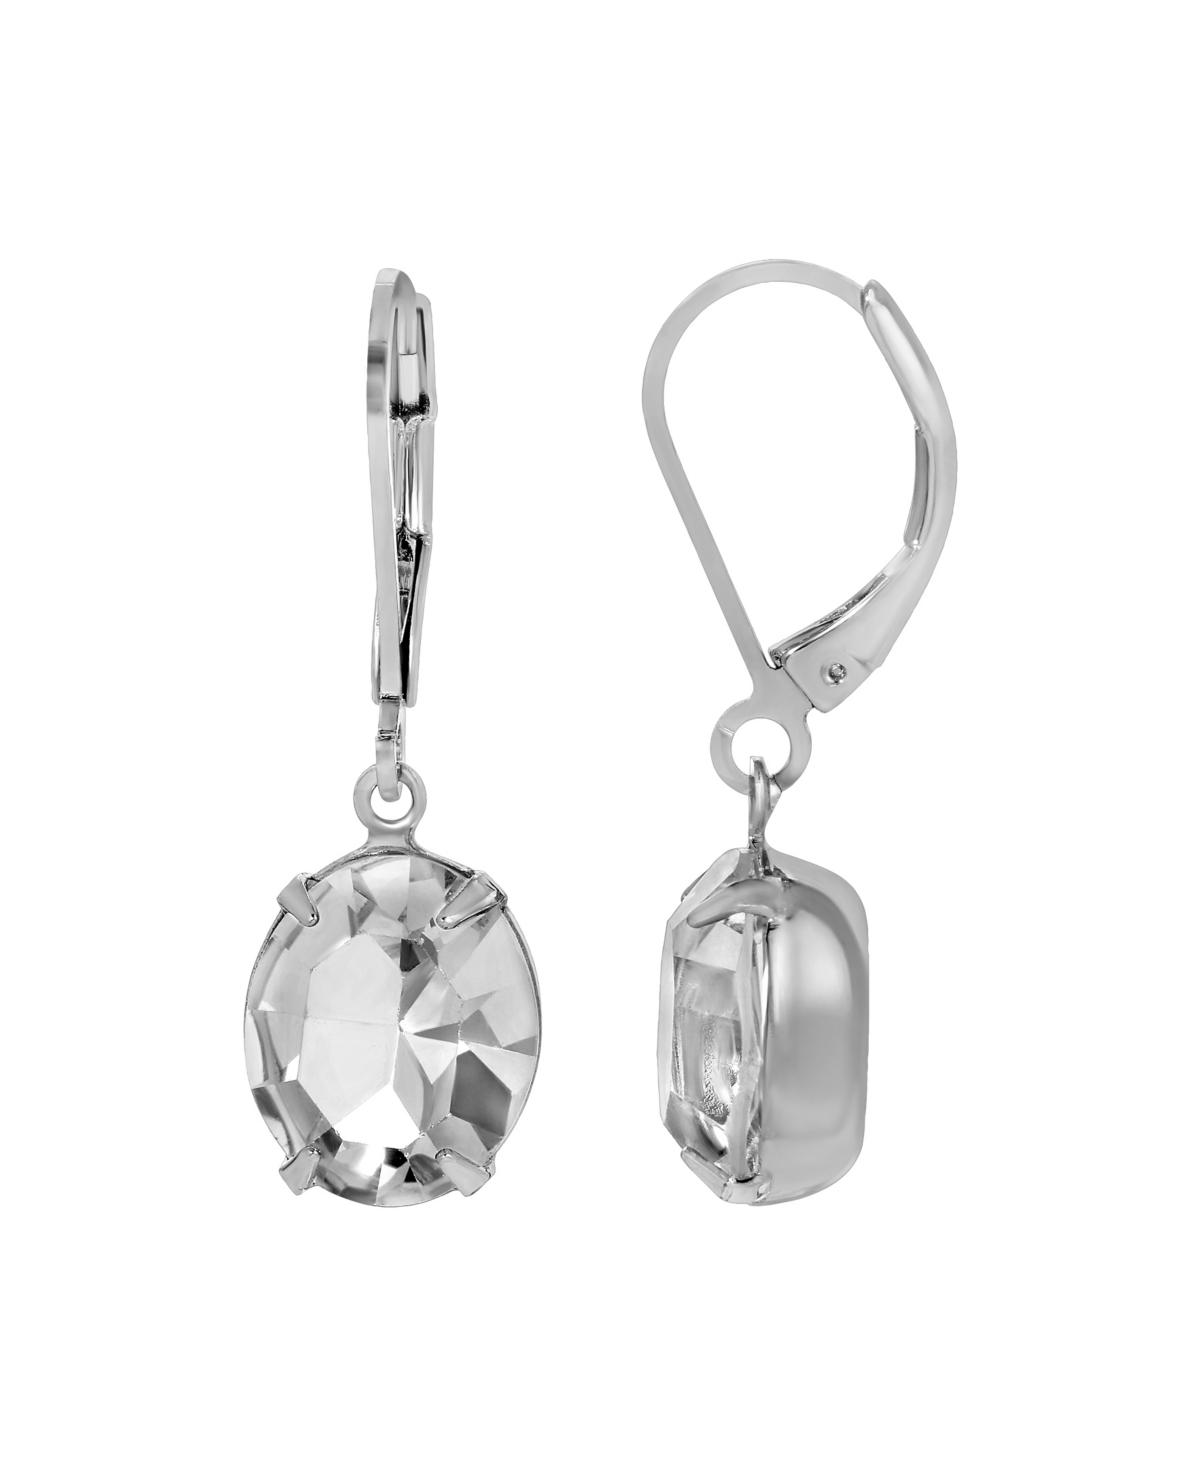 Silver Tone Oval Crystal Earrings - Silver